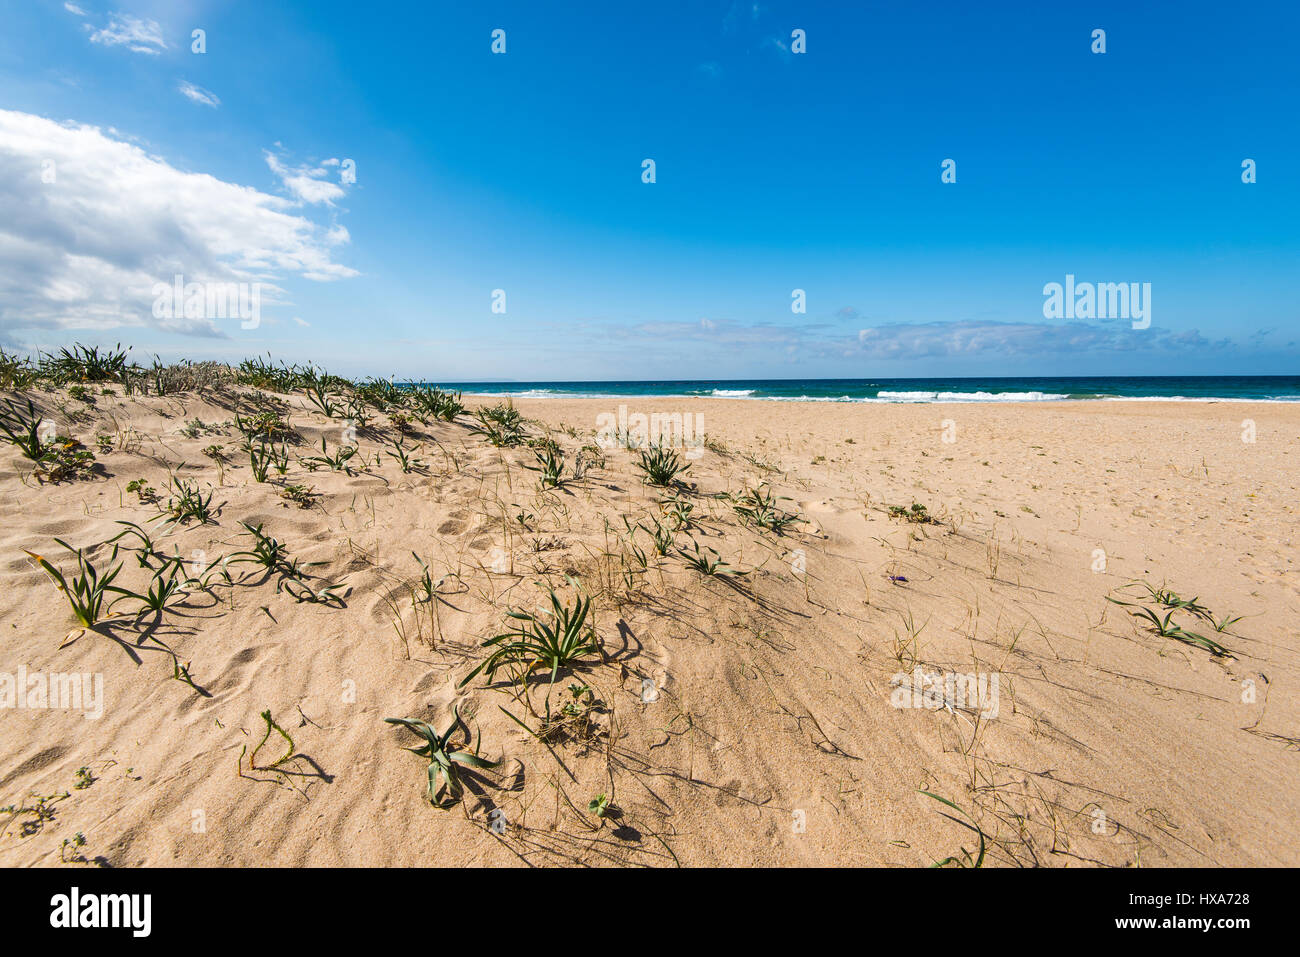 Dunes in Zahara de los Atunes natural reserve, Spain Stock Photo